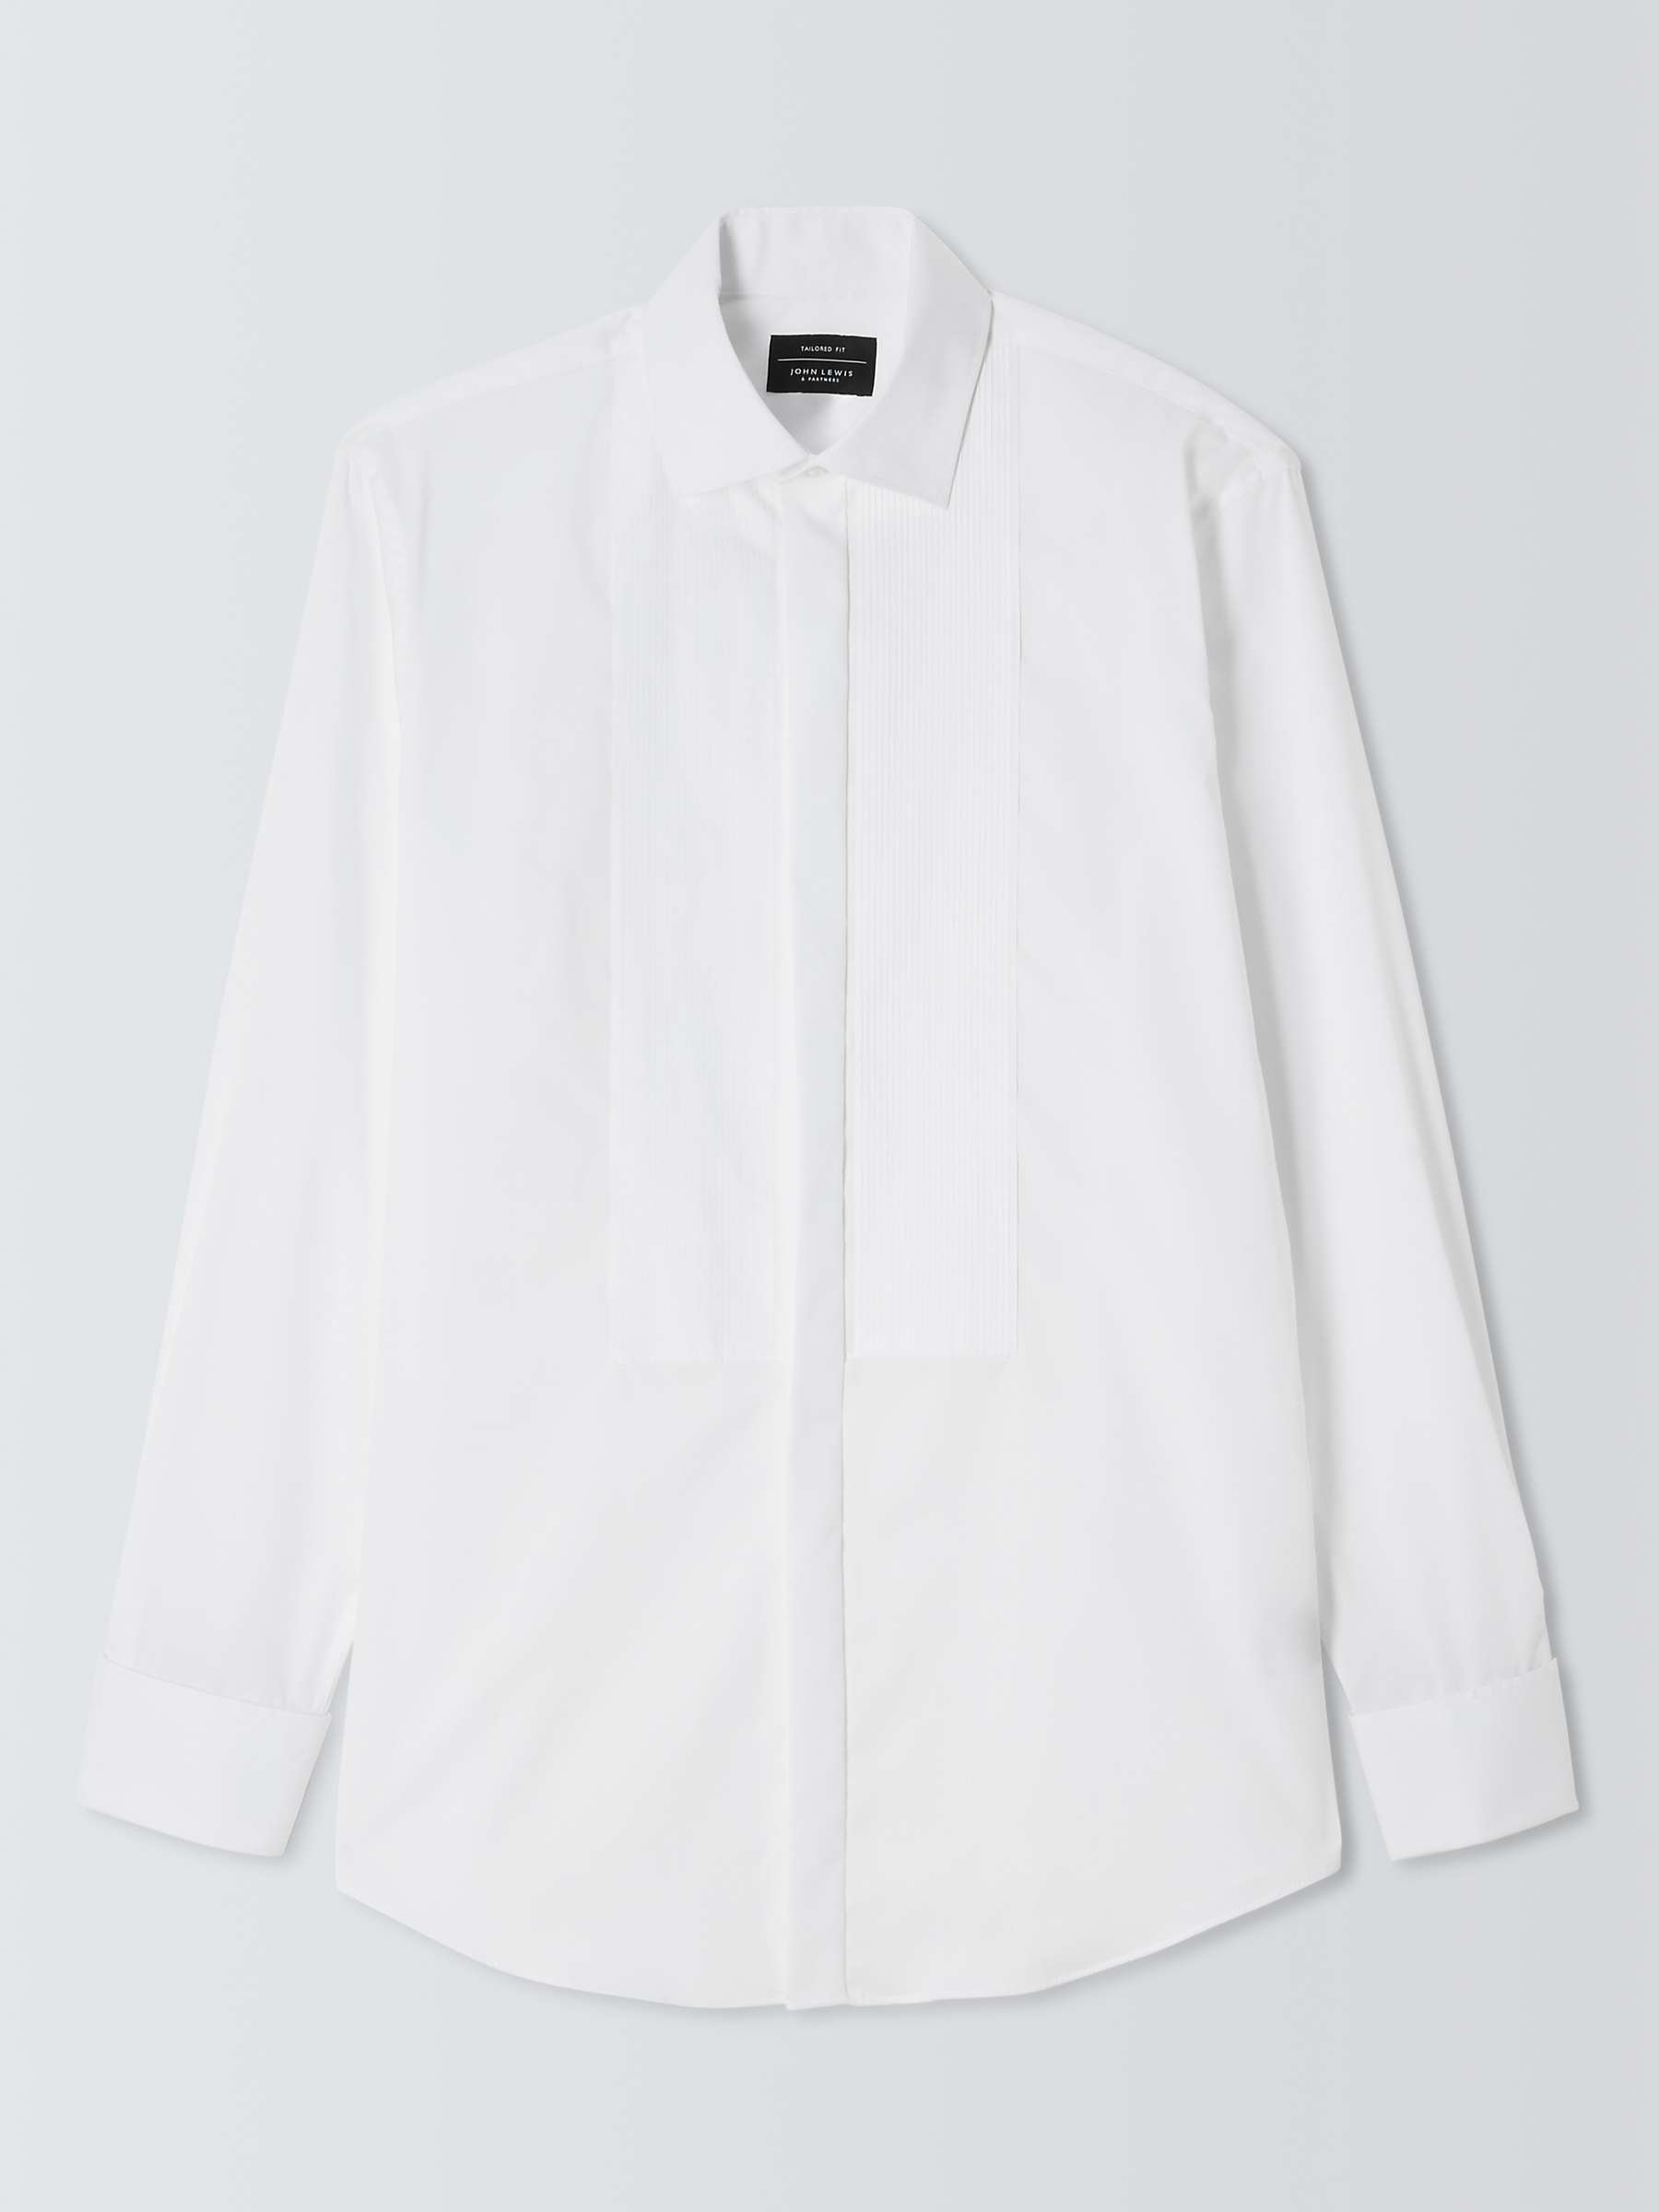 John Lewis Pleated Point Collar Tailored Fit Dress Shirt, White at John ...